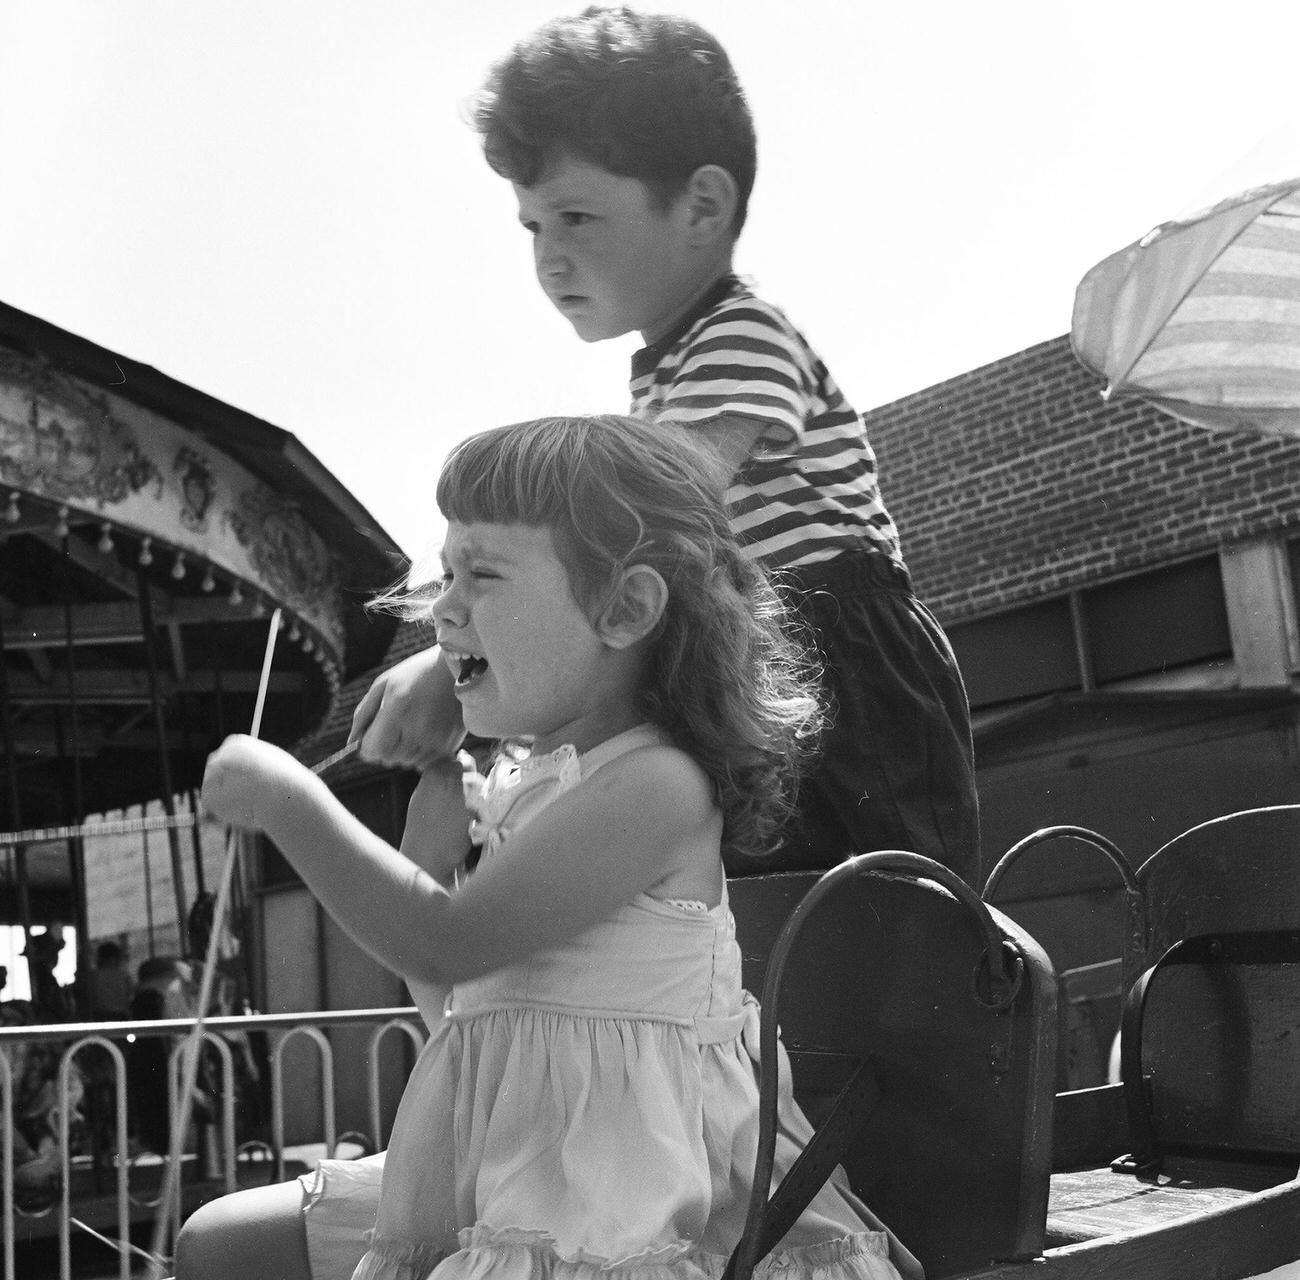 Siblings On Amusement Park Ride, 1948